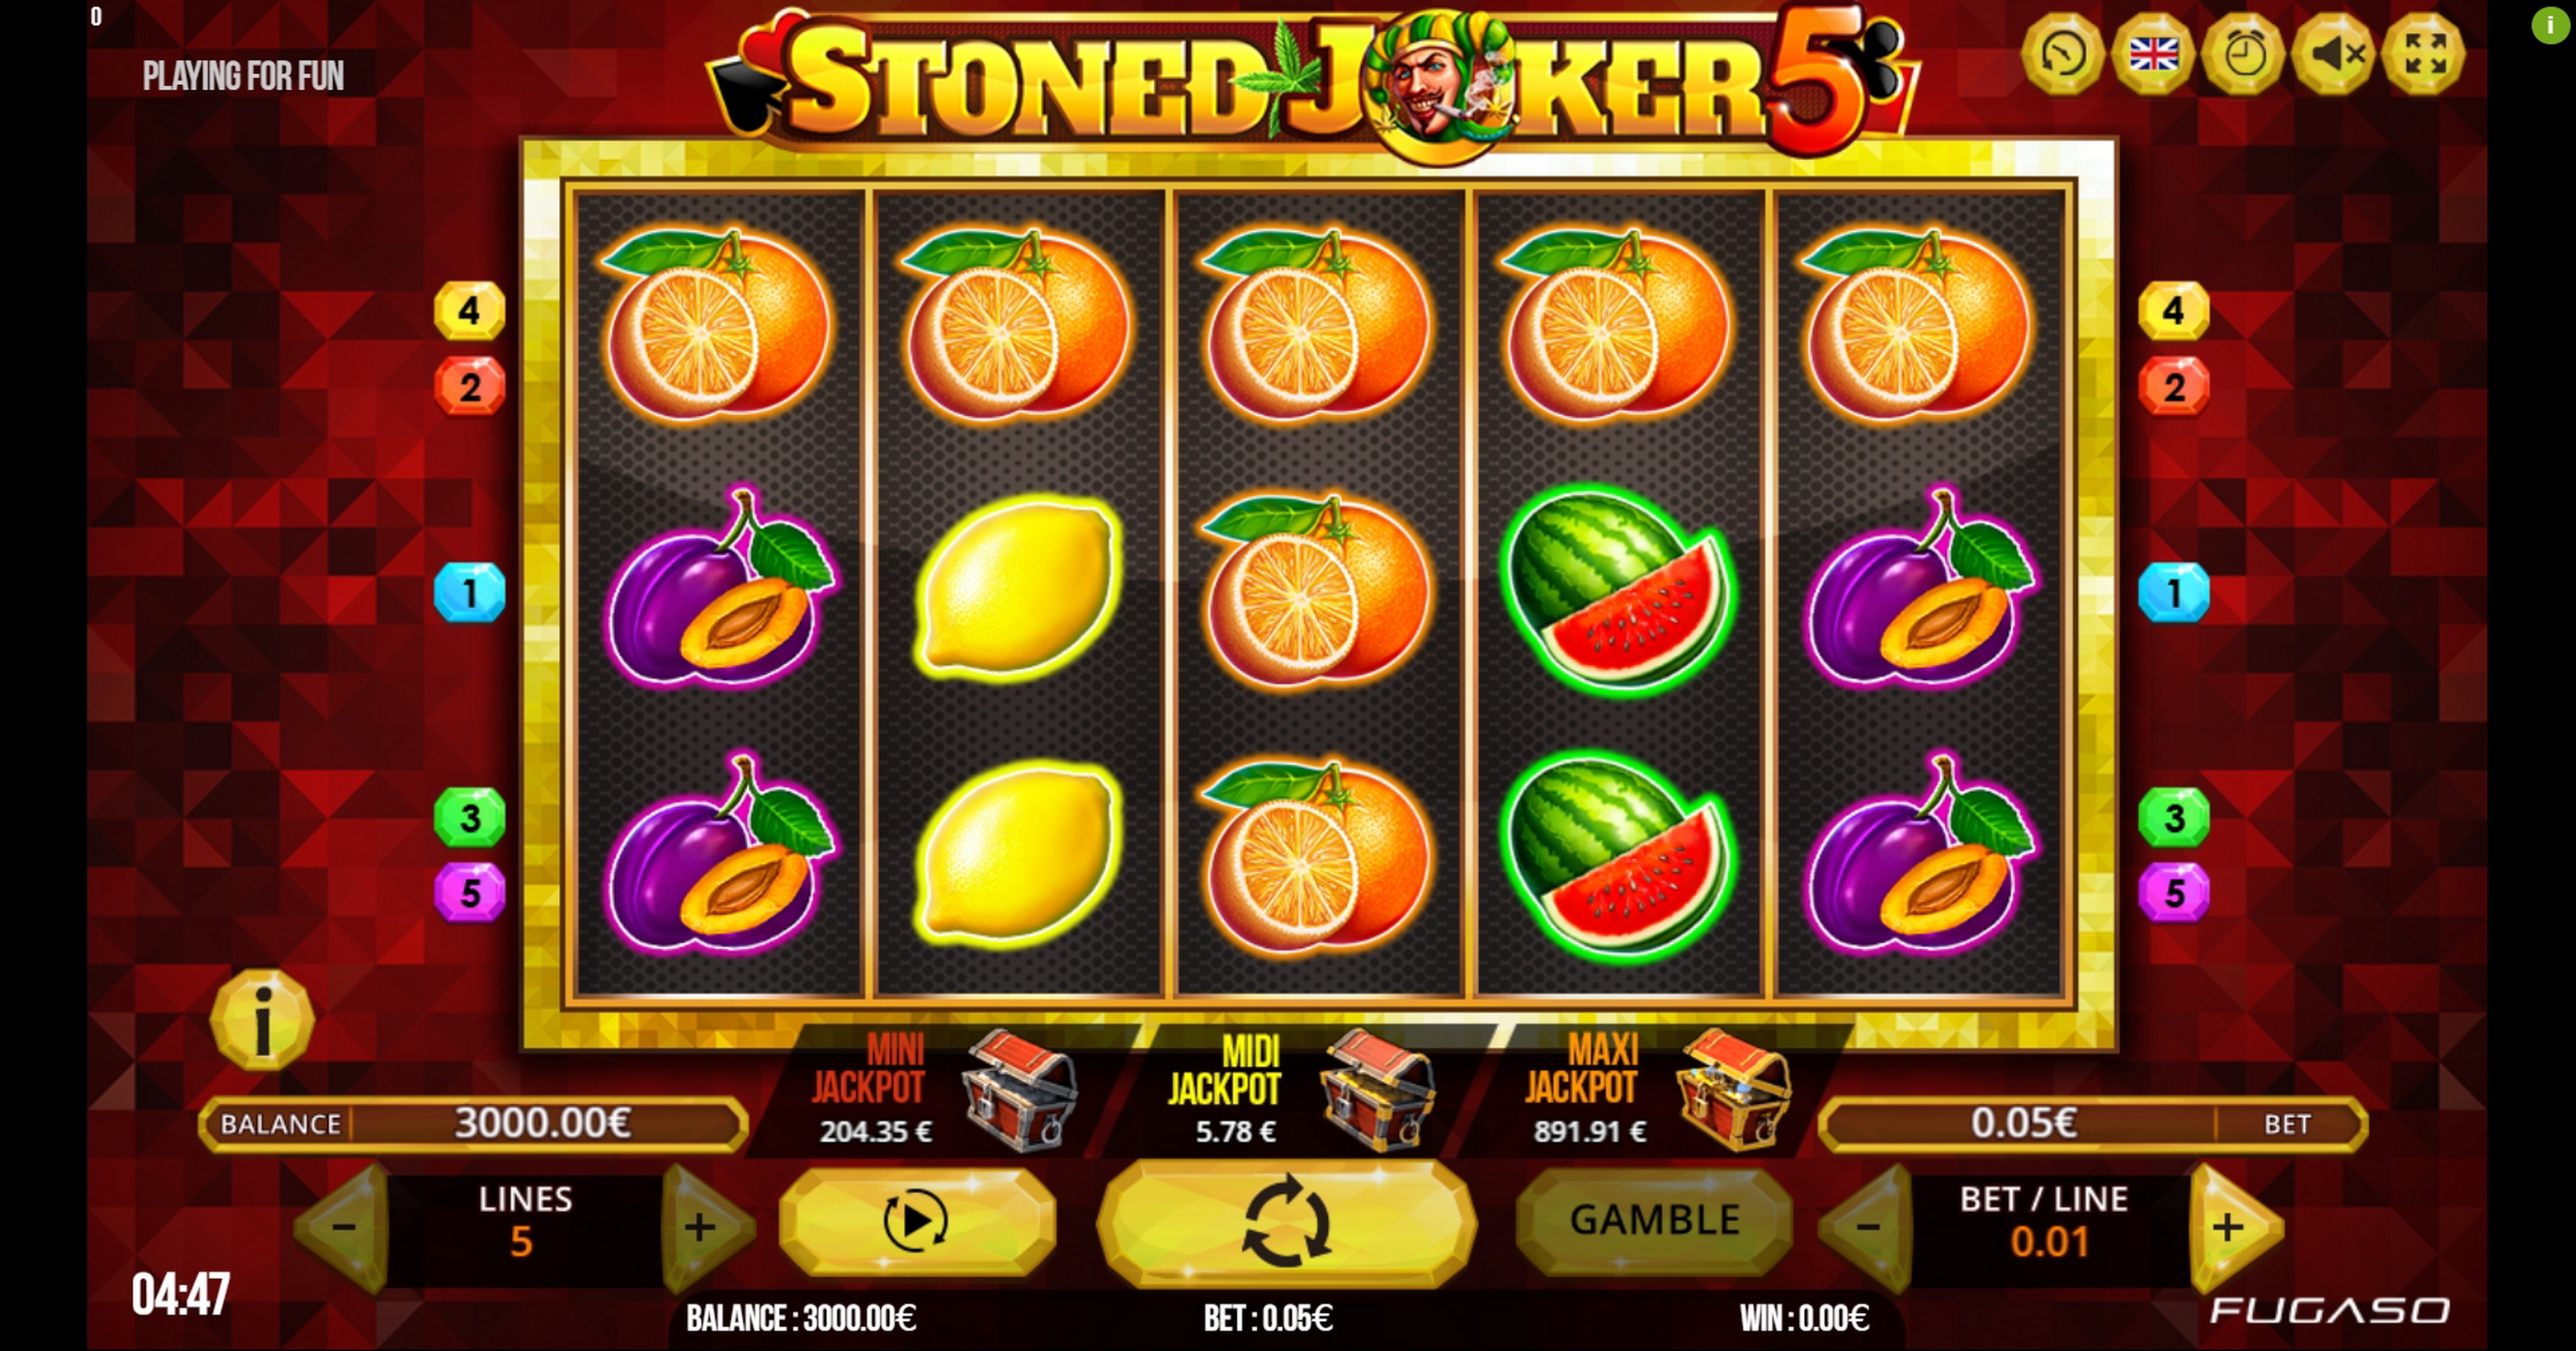 Stoned Joker 5 free demo play Slot Machine Online by